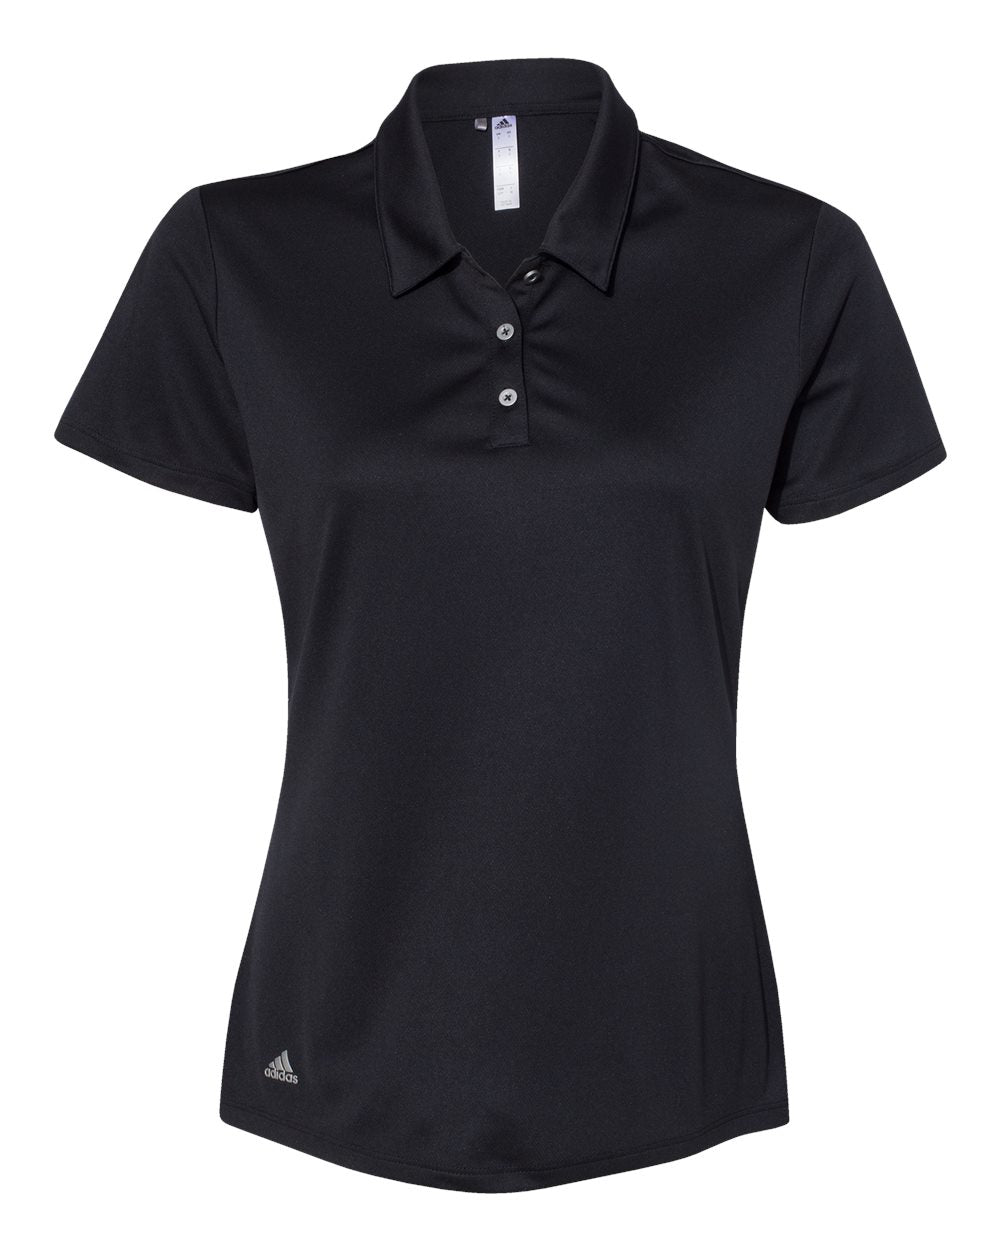 Adidas, Adidas A231 Women's Performance Sport Shirt - Black